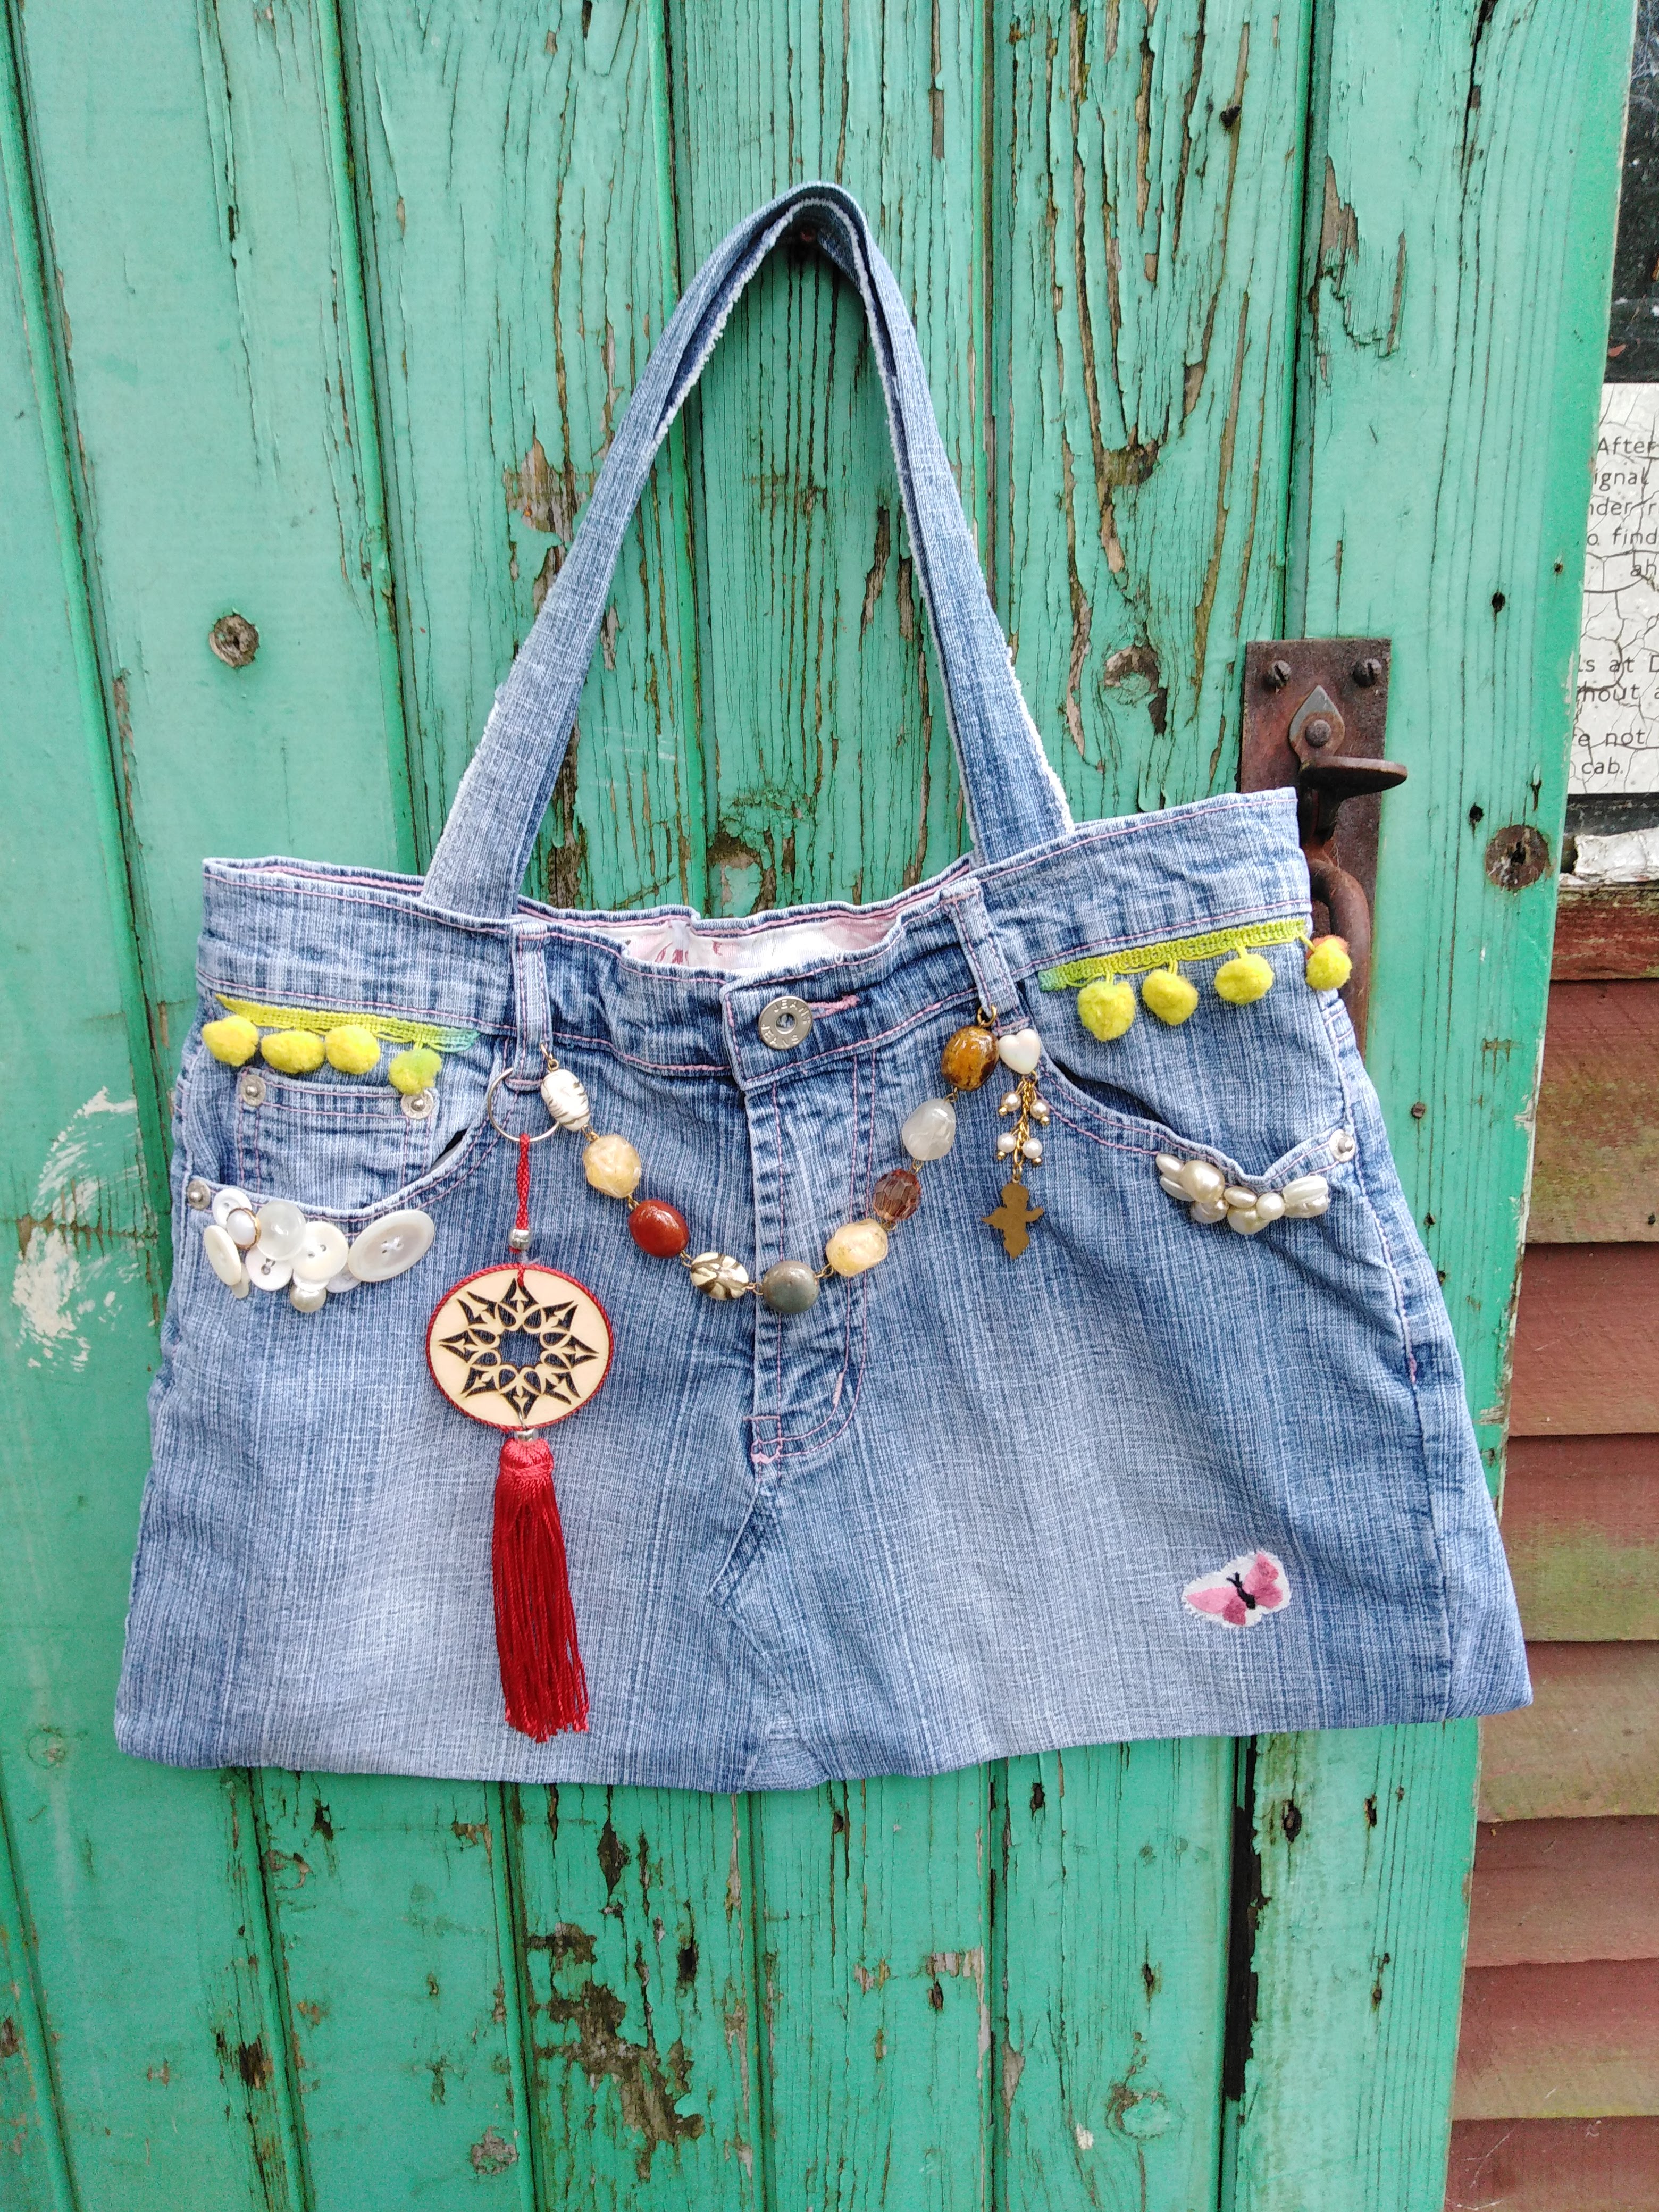 SALE. Upcycled jeans, eco friendly bag, purse. Ladies denim bag, hand